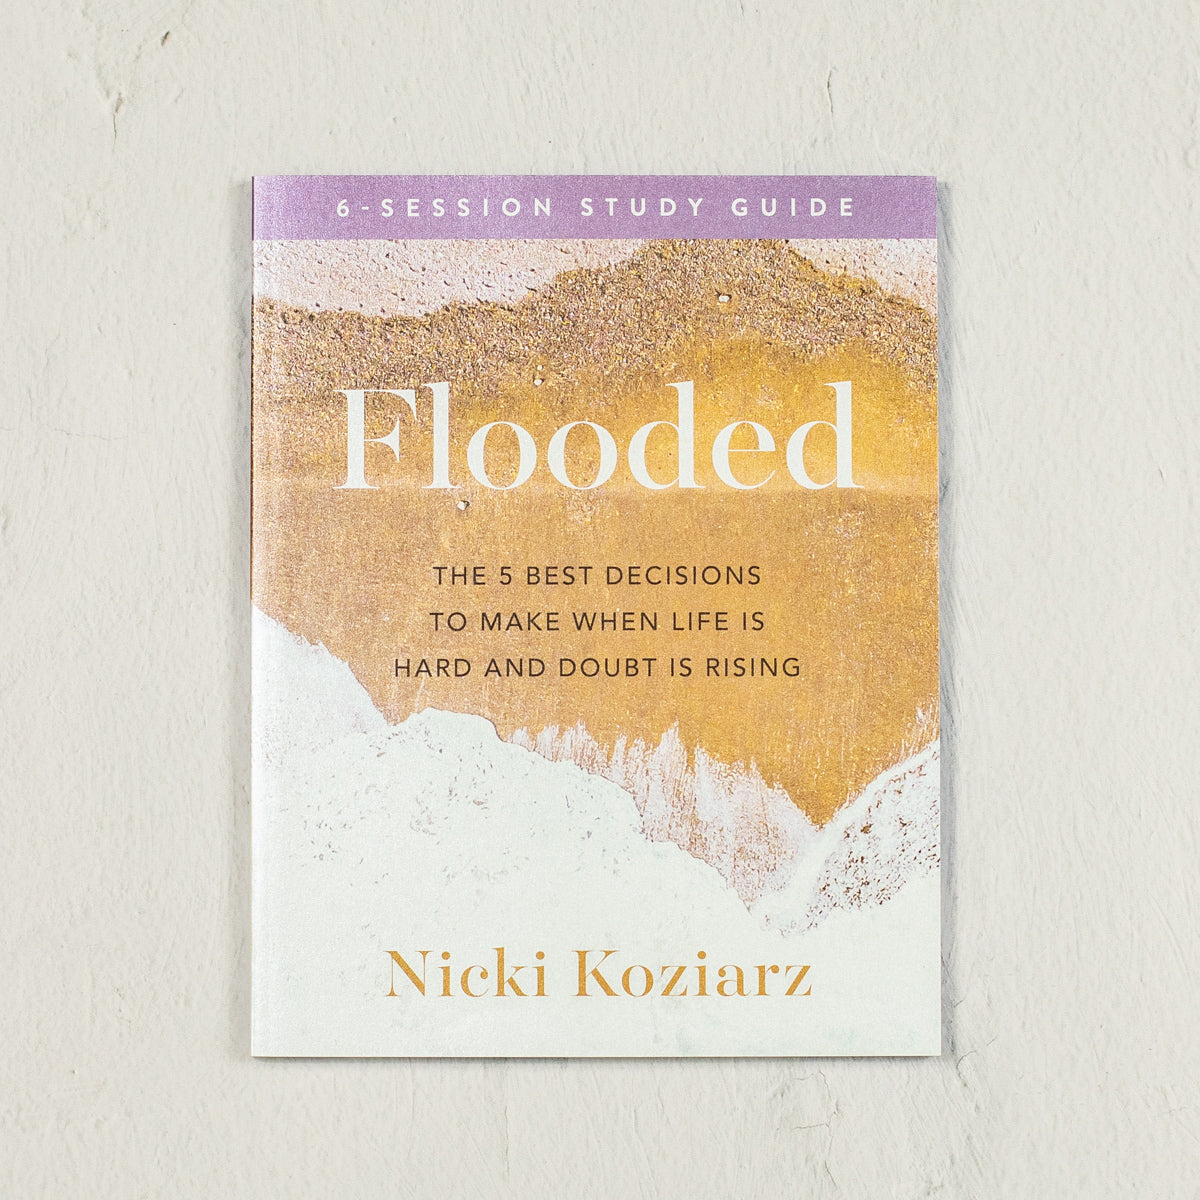 Flooded Study Guide by Nicki Koziarz